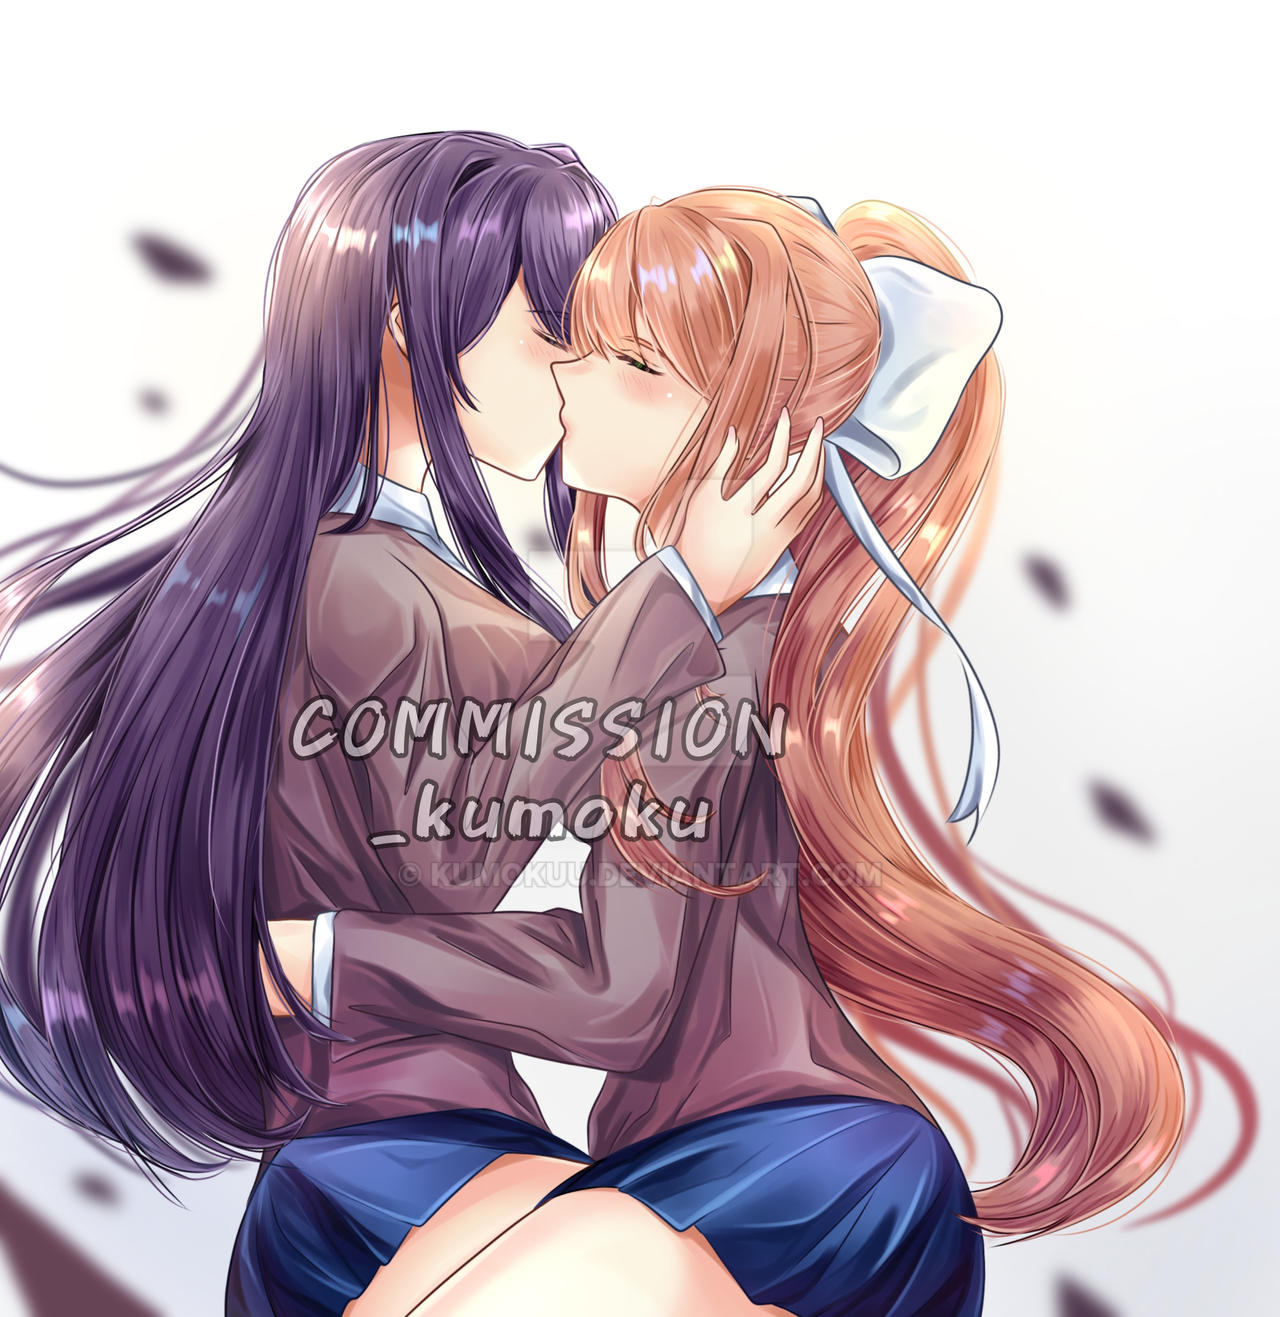 Monika and Yuri~ 💚💜 (by QuartizerMC on DeviantArt) : r/DDLC